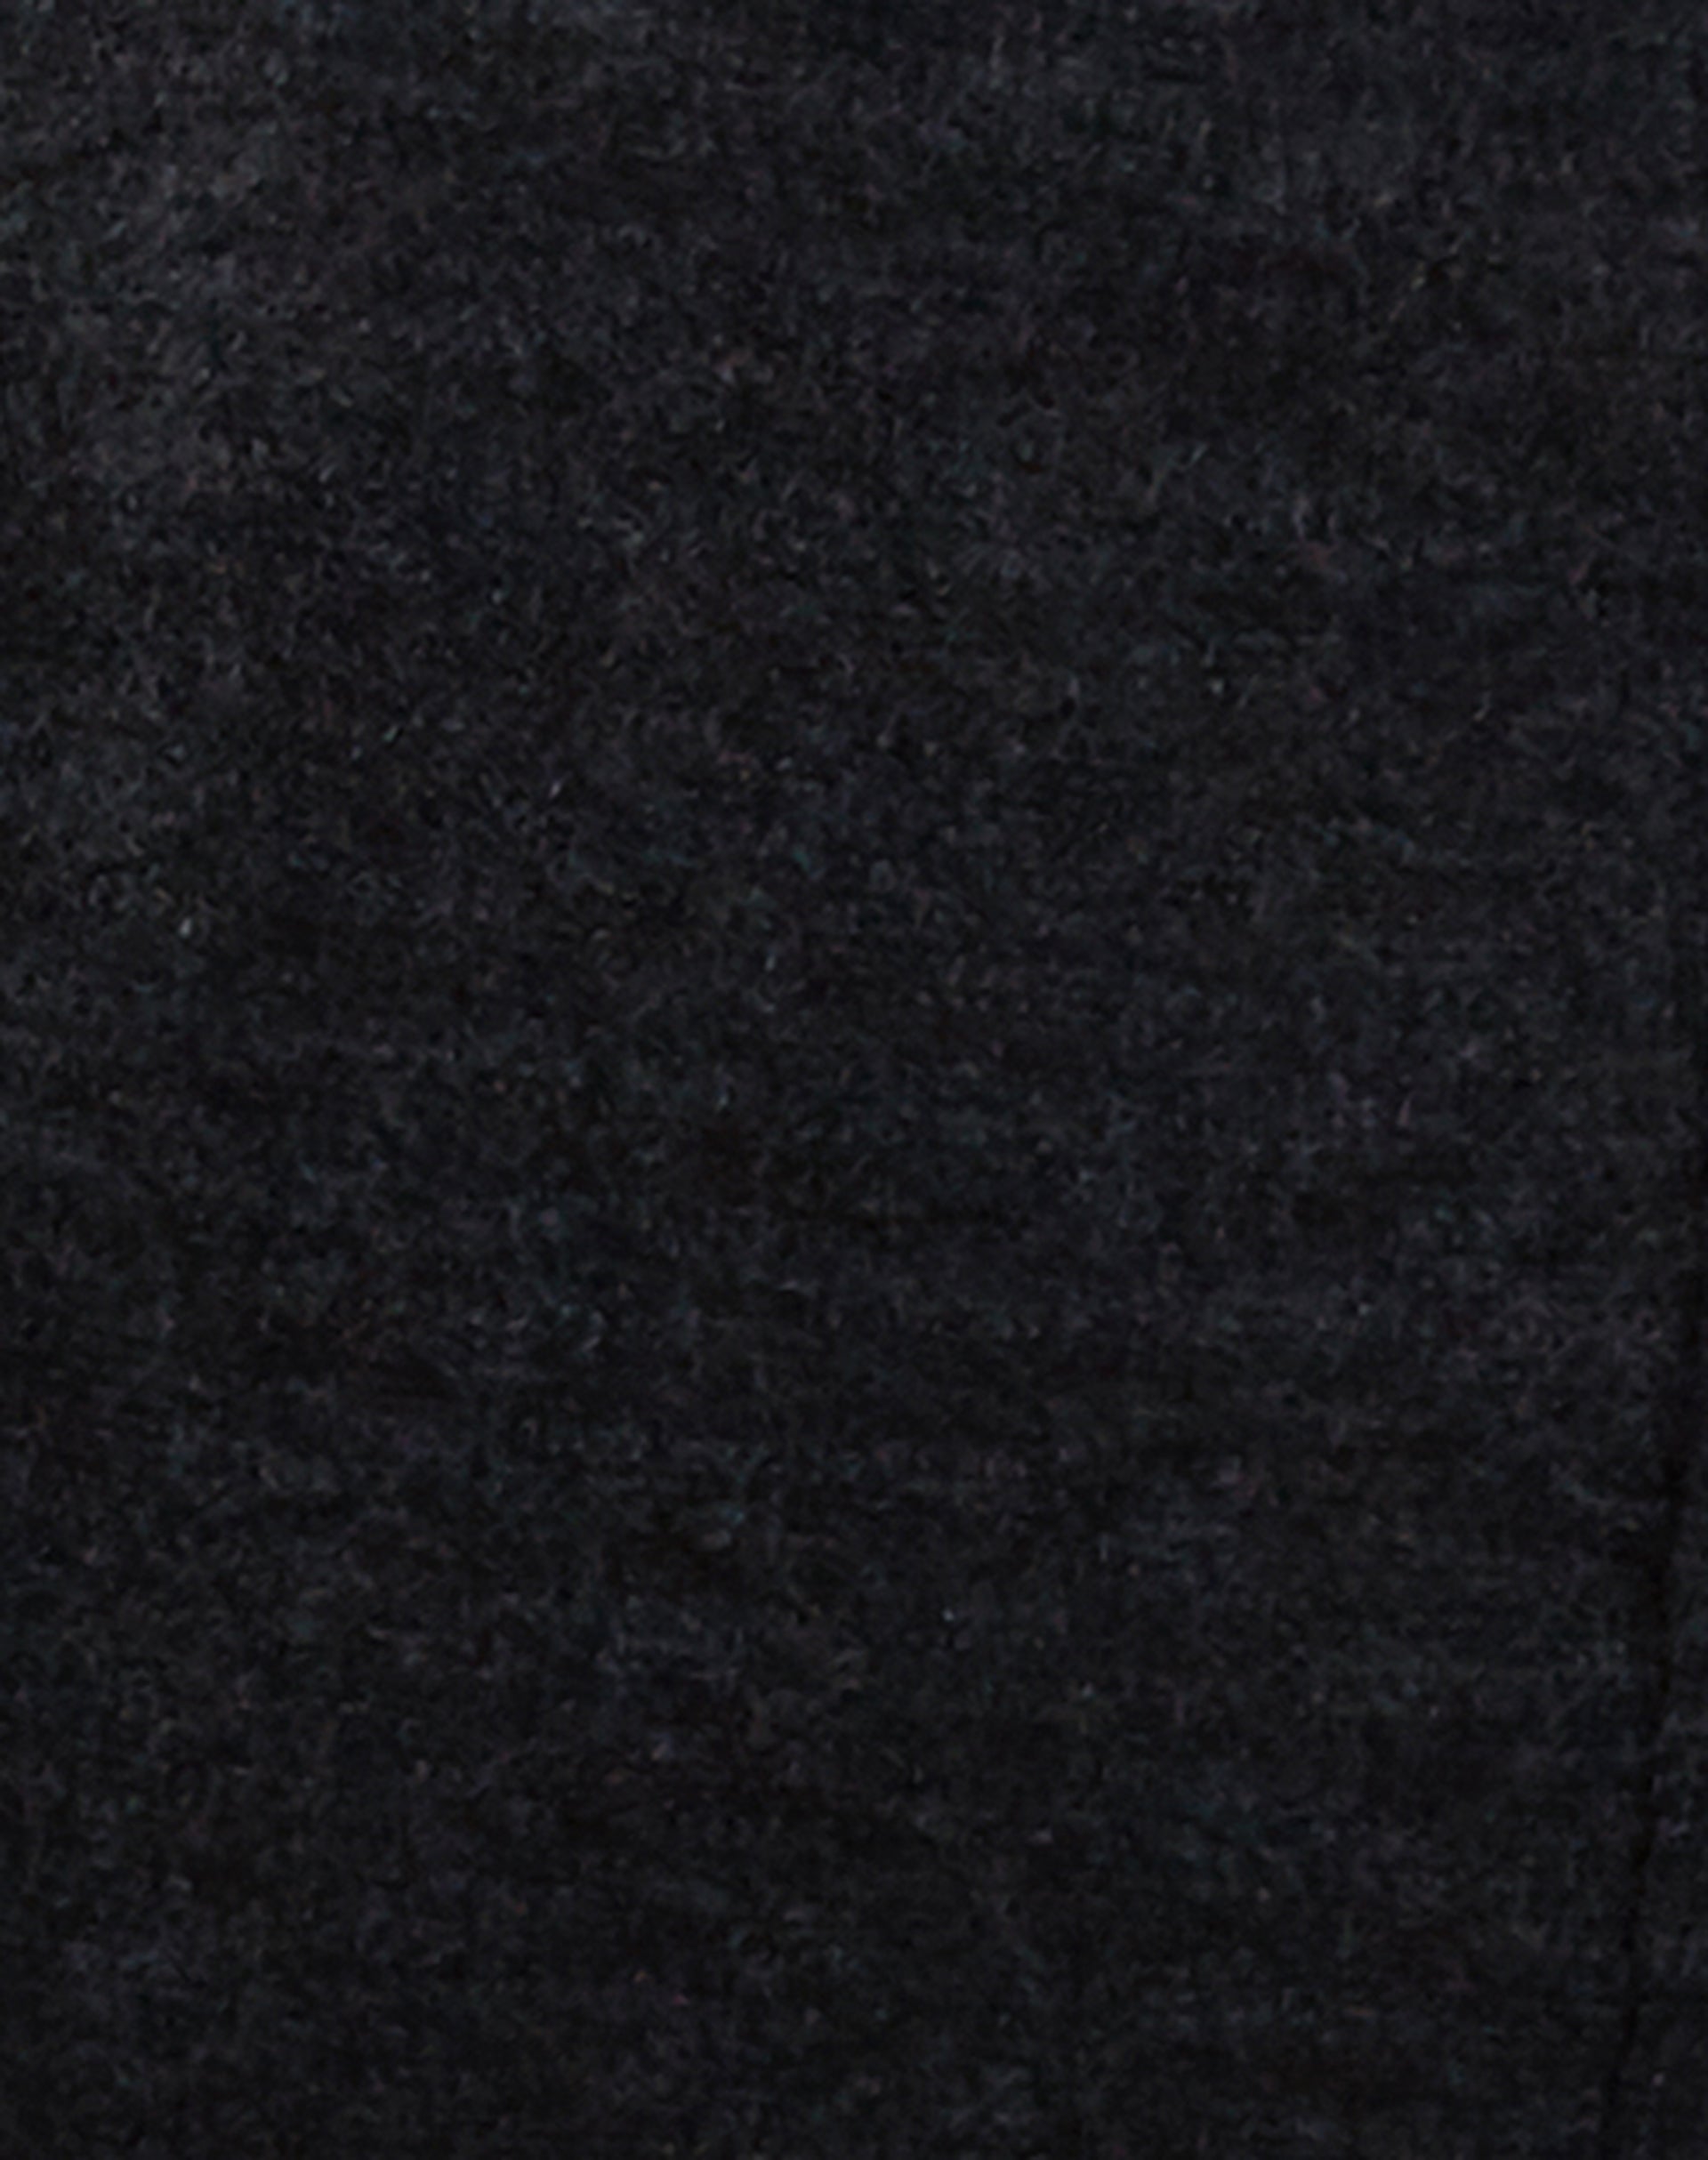 Dalika Knitted Shrug Top in Black